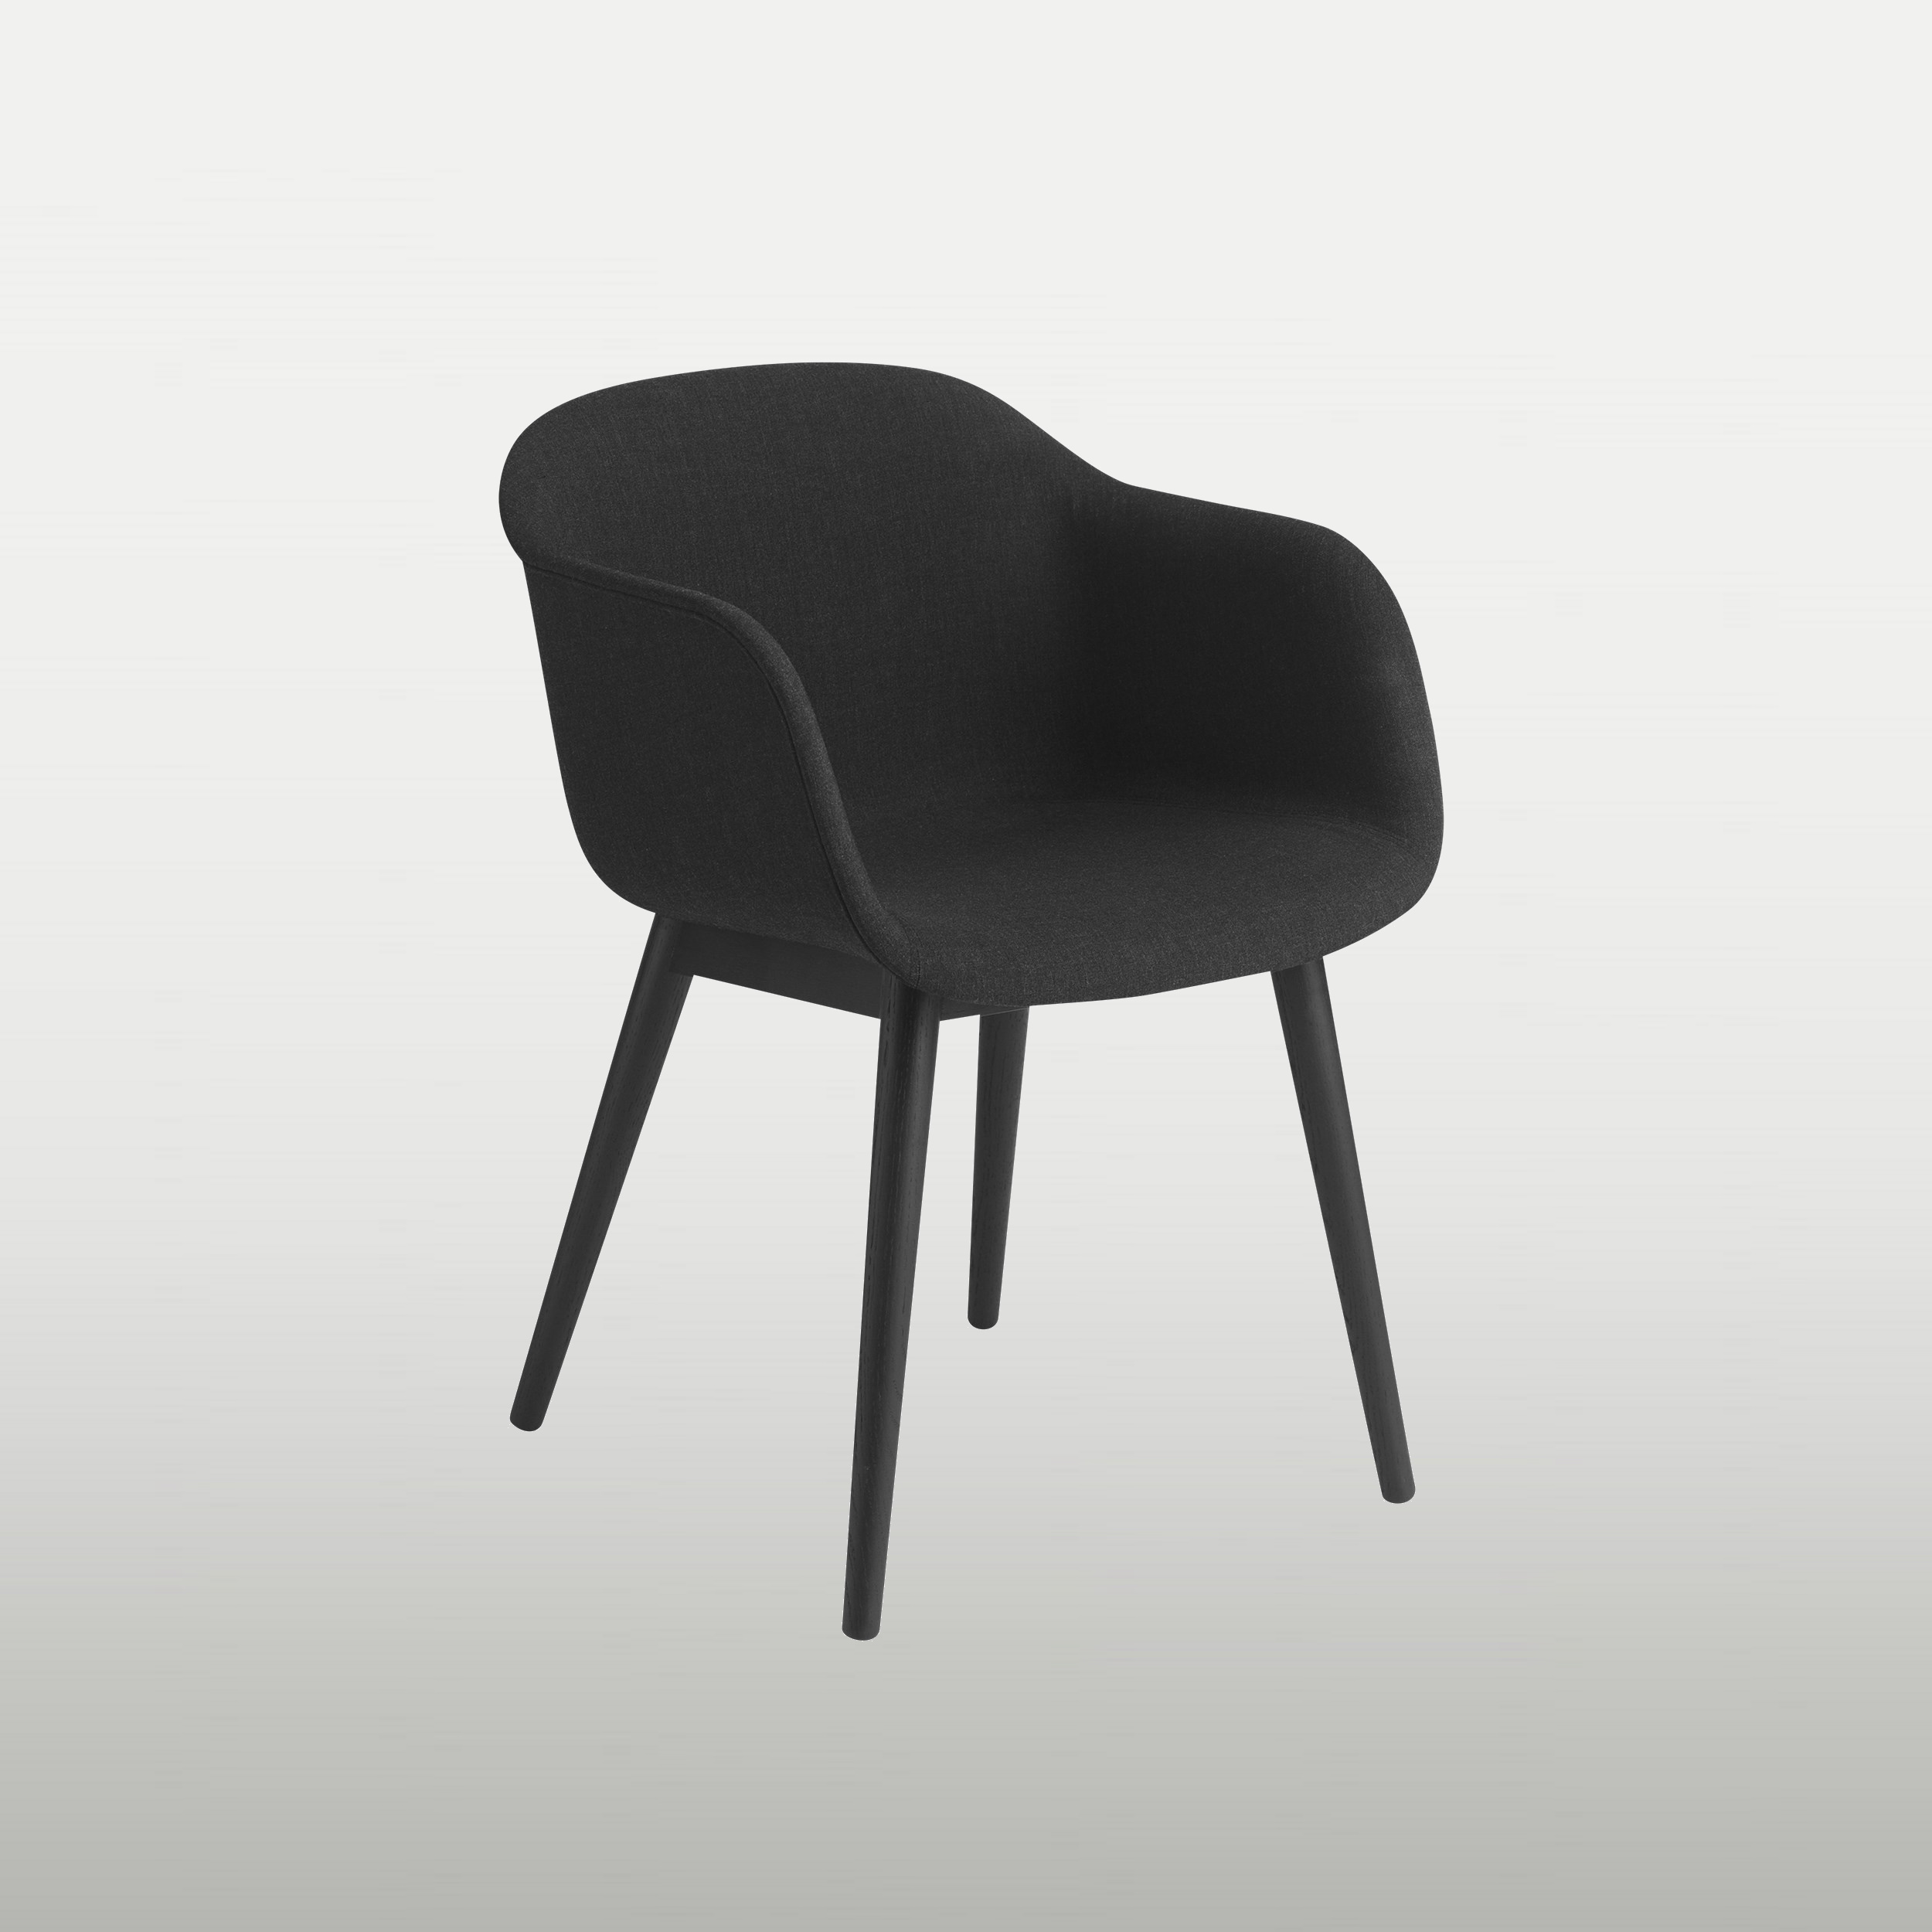 Conference chair Fiber, dark gray upholstery, black wooden legs